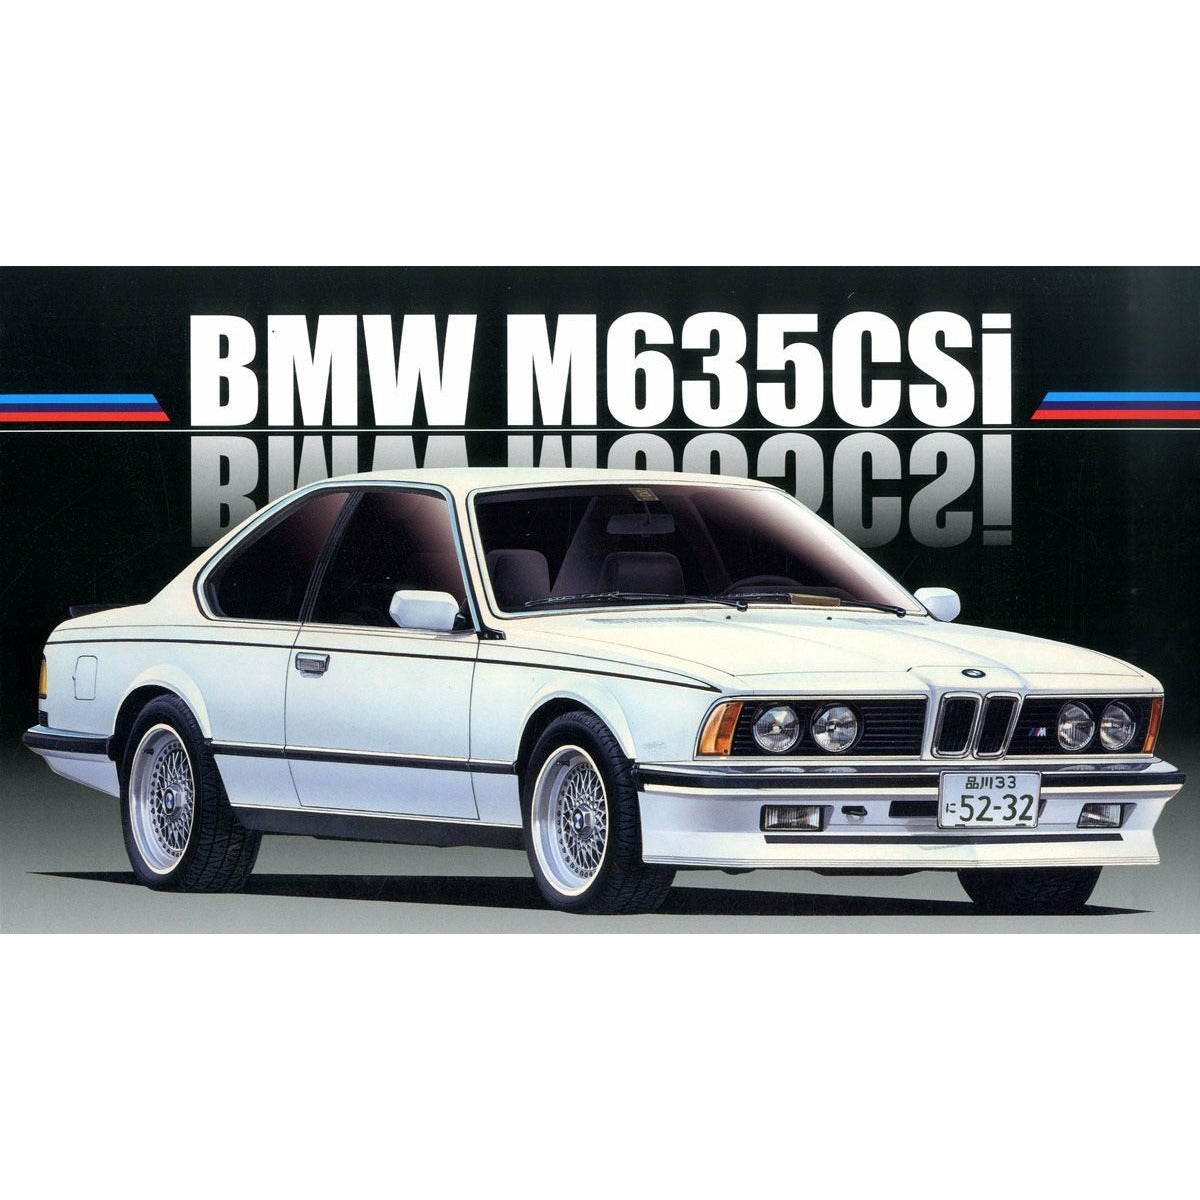 Real Sports Car Series (24) BMW M635CSi 1/24 Model Car Kit #126500 by Fujimi